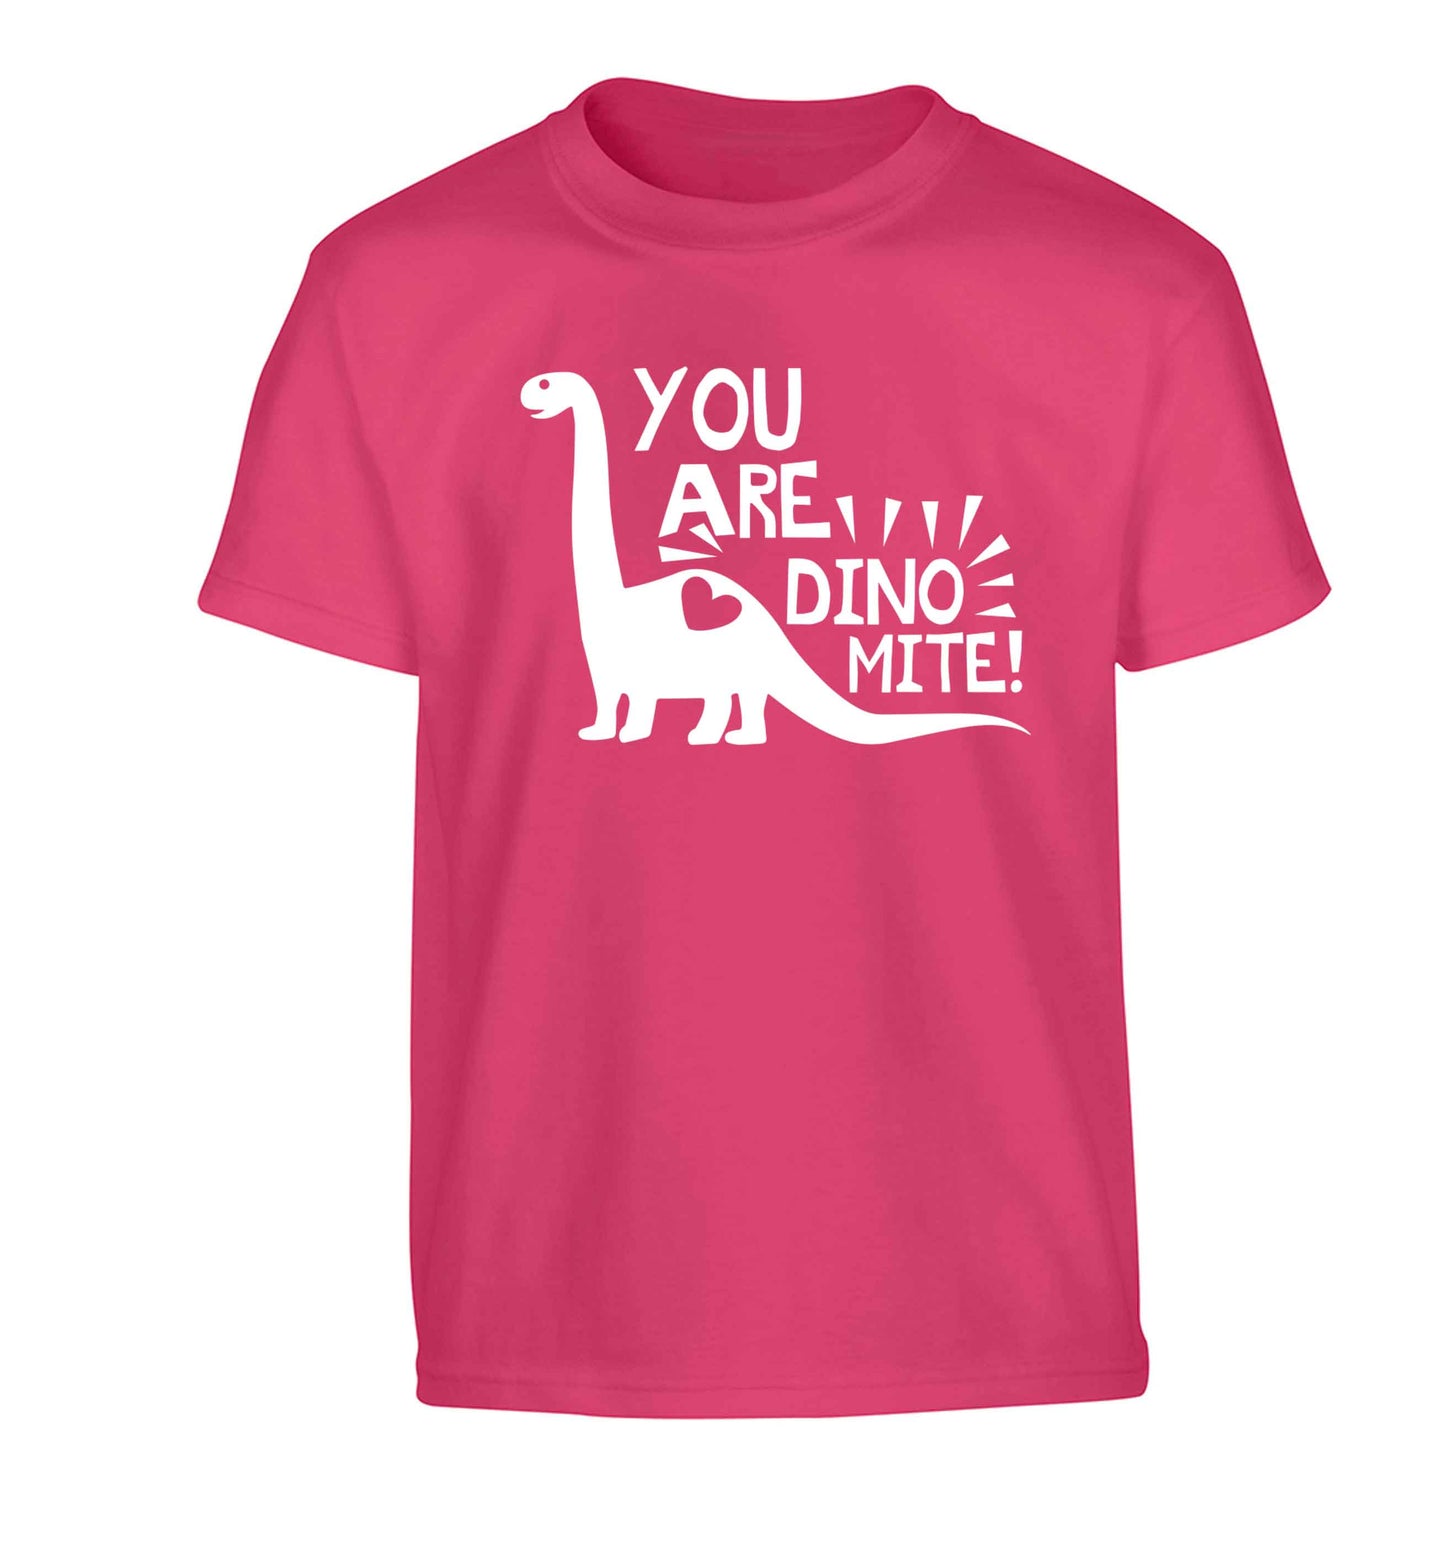 You are dinomite! Children's pink Tshirt 12-13 Years